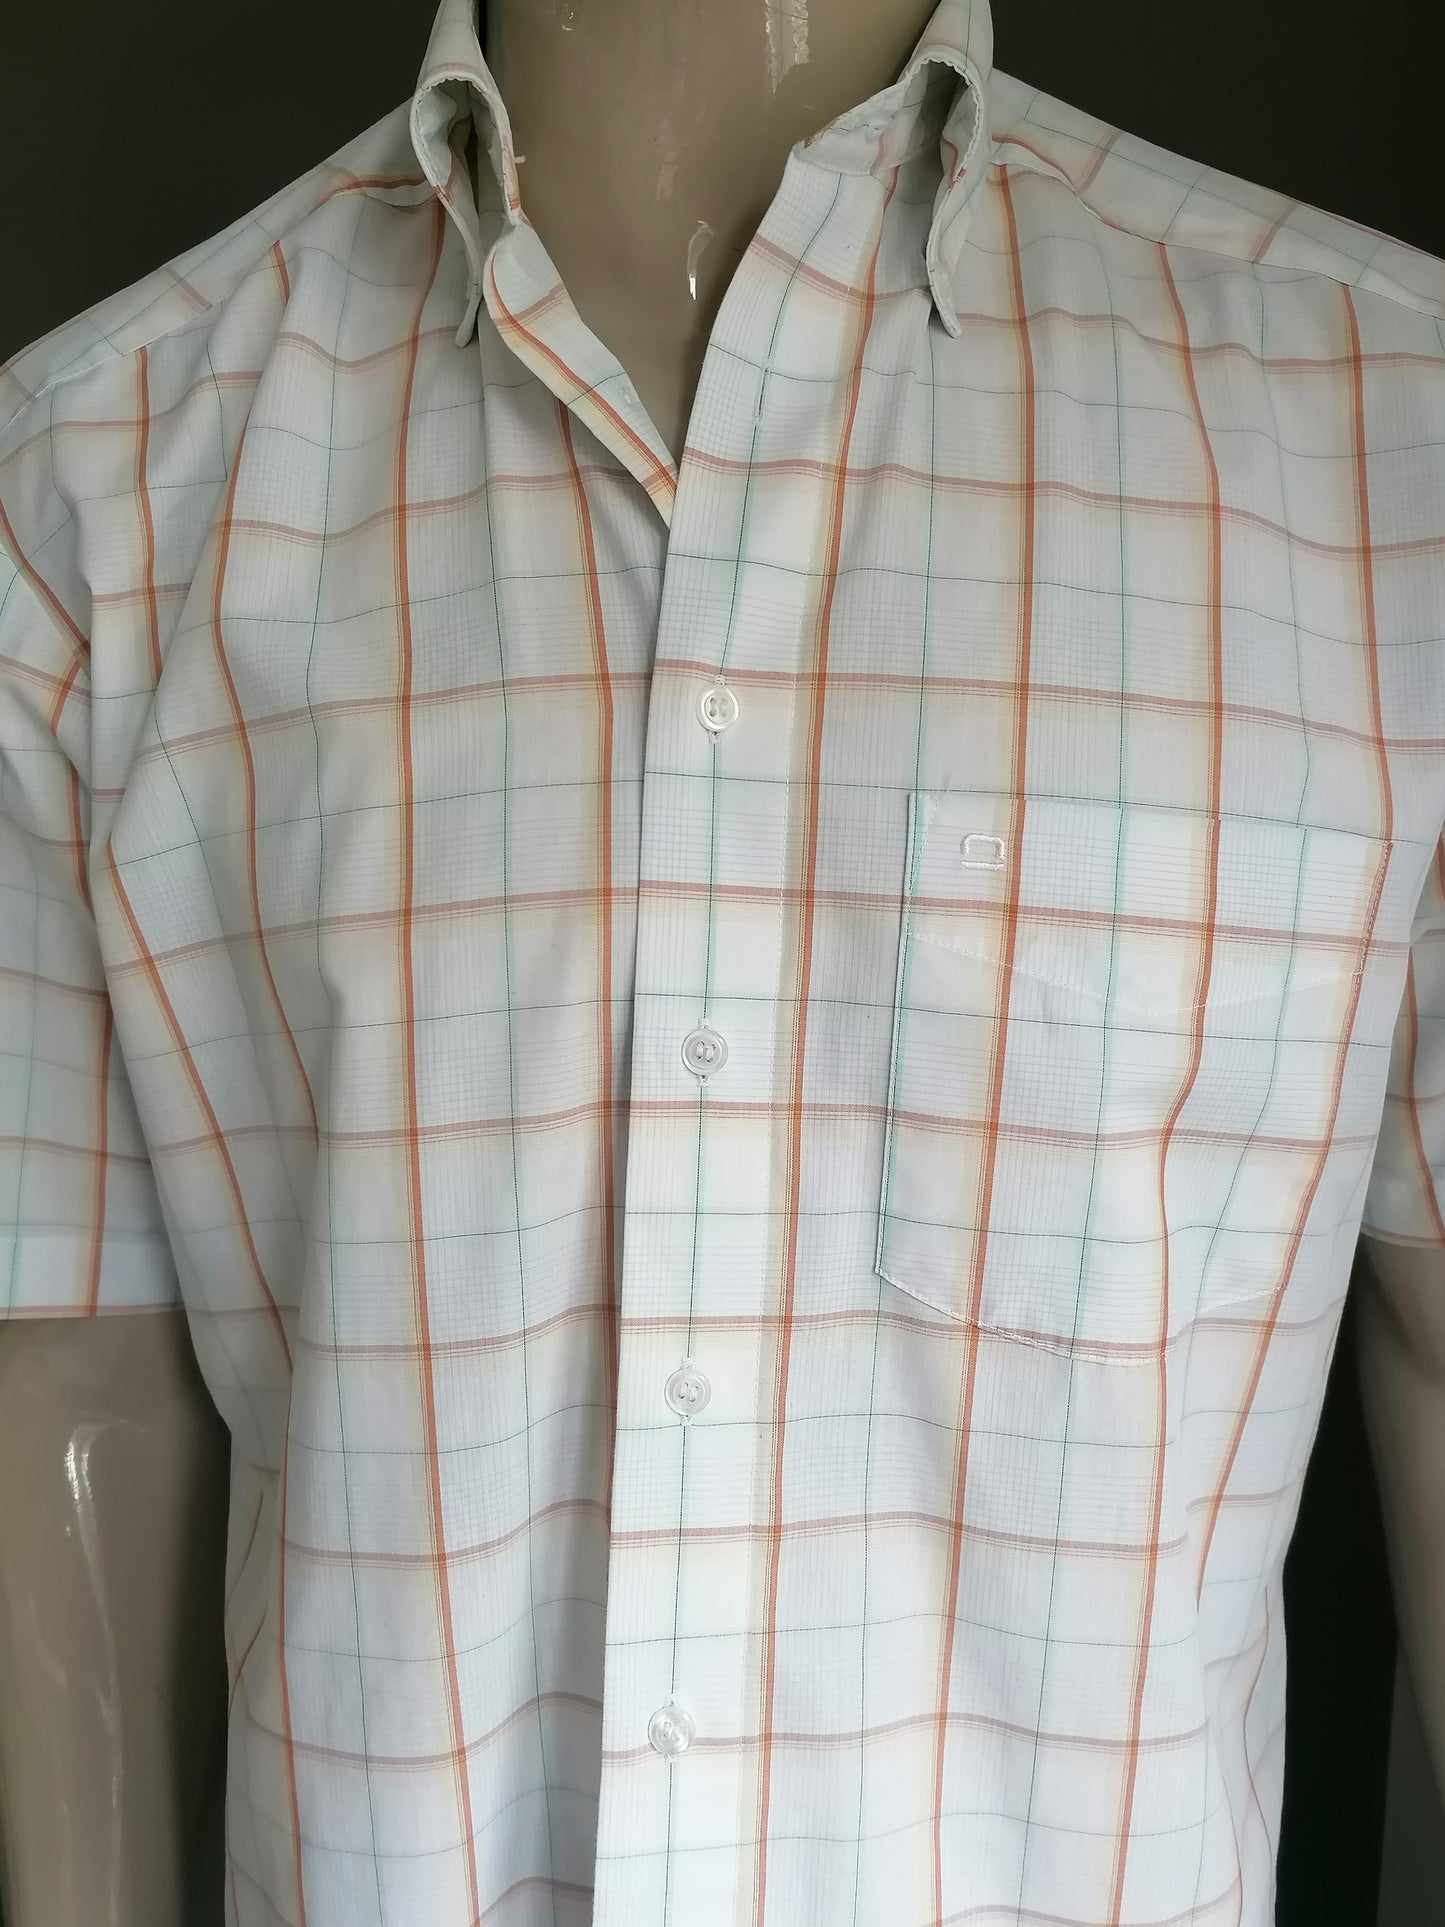 Olympe Tendenz Shirt Short Sleeve. Bleu jaune orange. La taille 39 / M. est plus spacieuse